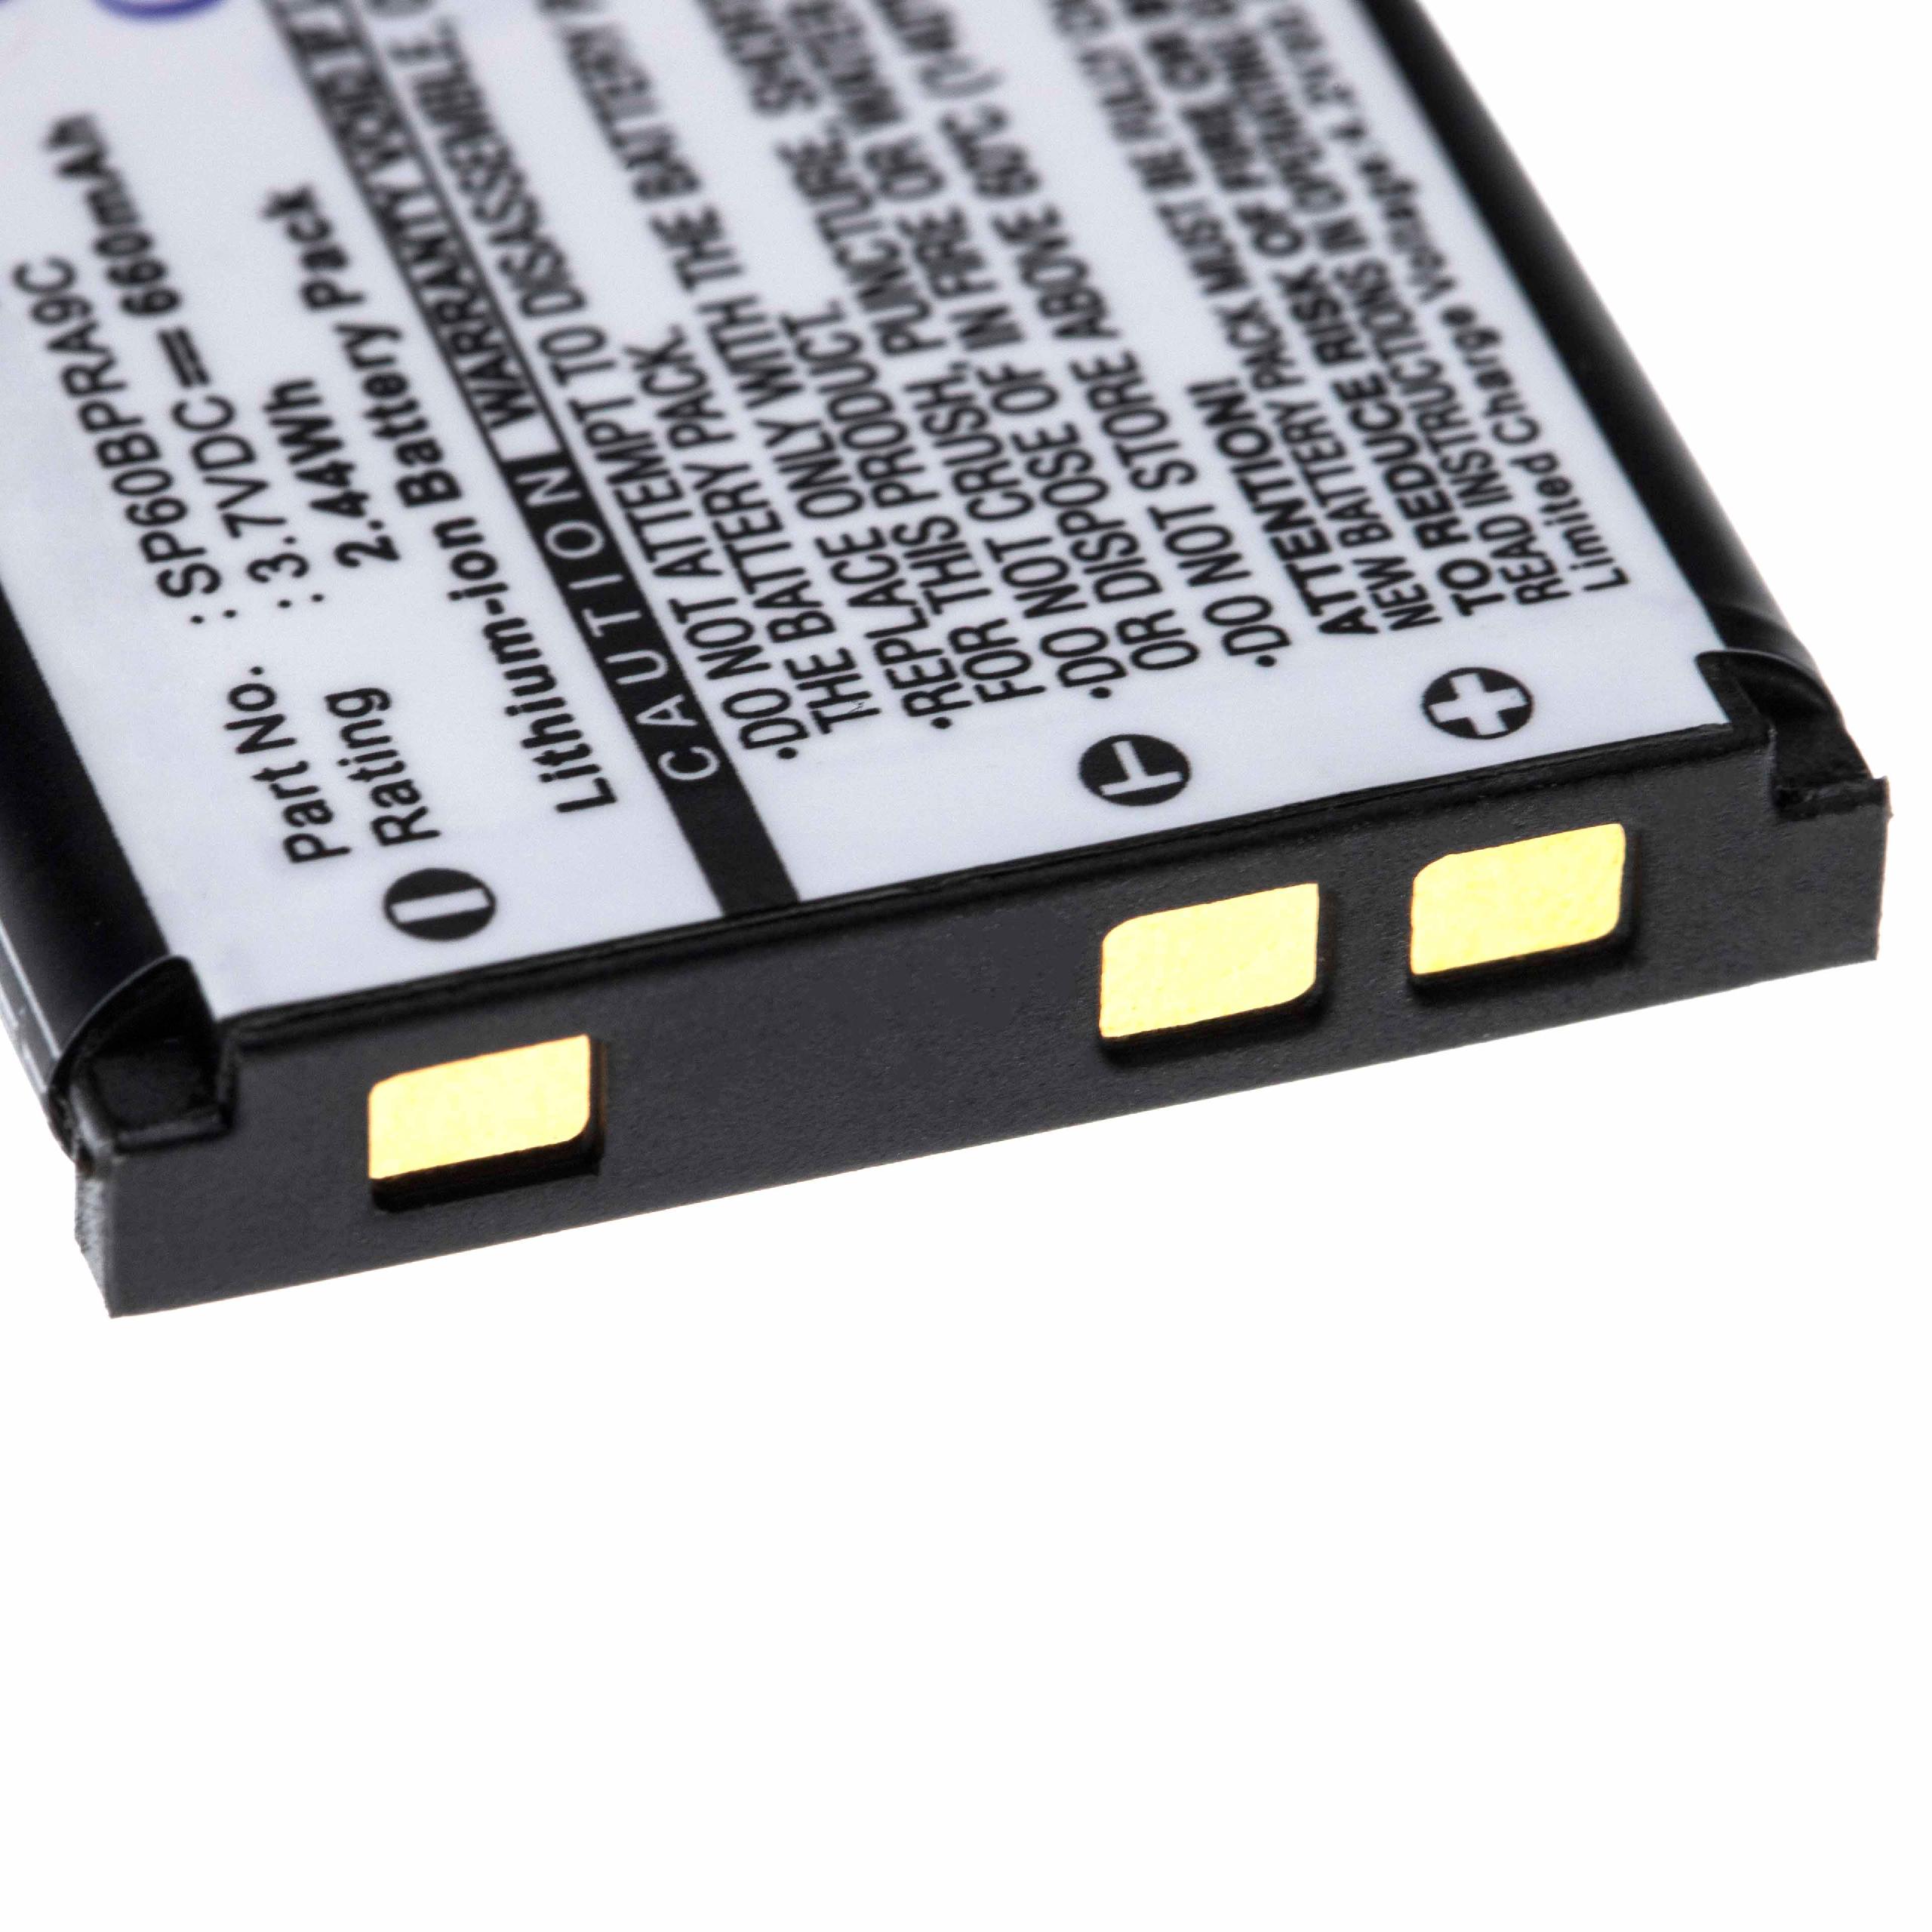 Battery Replacement for BenQ DLI216 - 660mAh, 3.7V, Li-Ion